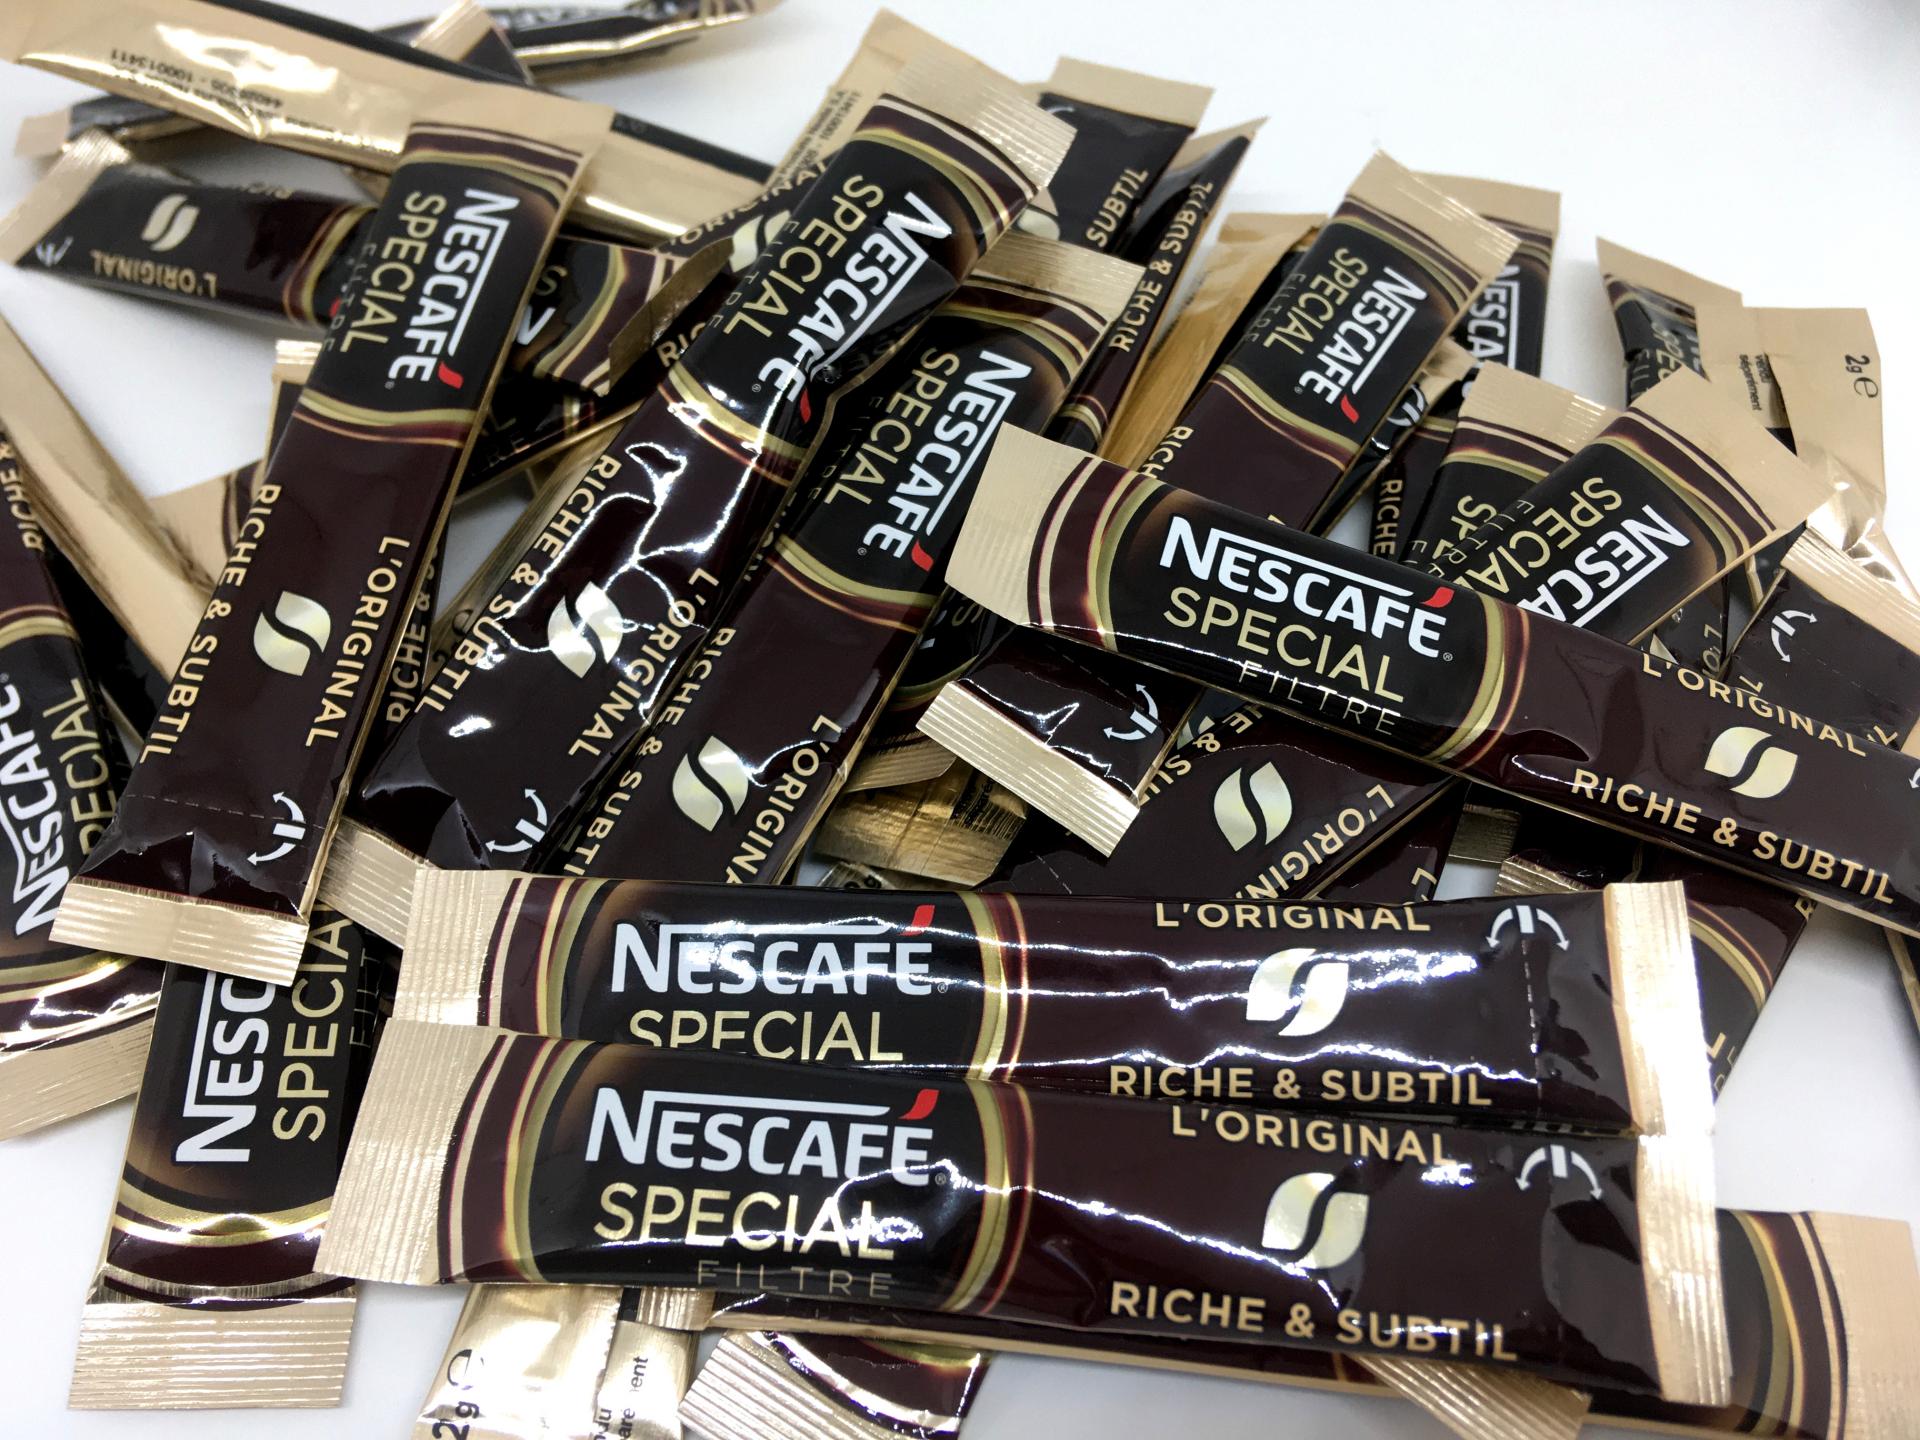 Nescafé - Cappuccino - Café soluble - Sticks - 10 tasses